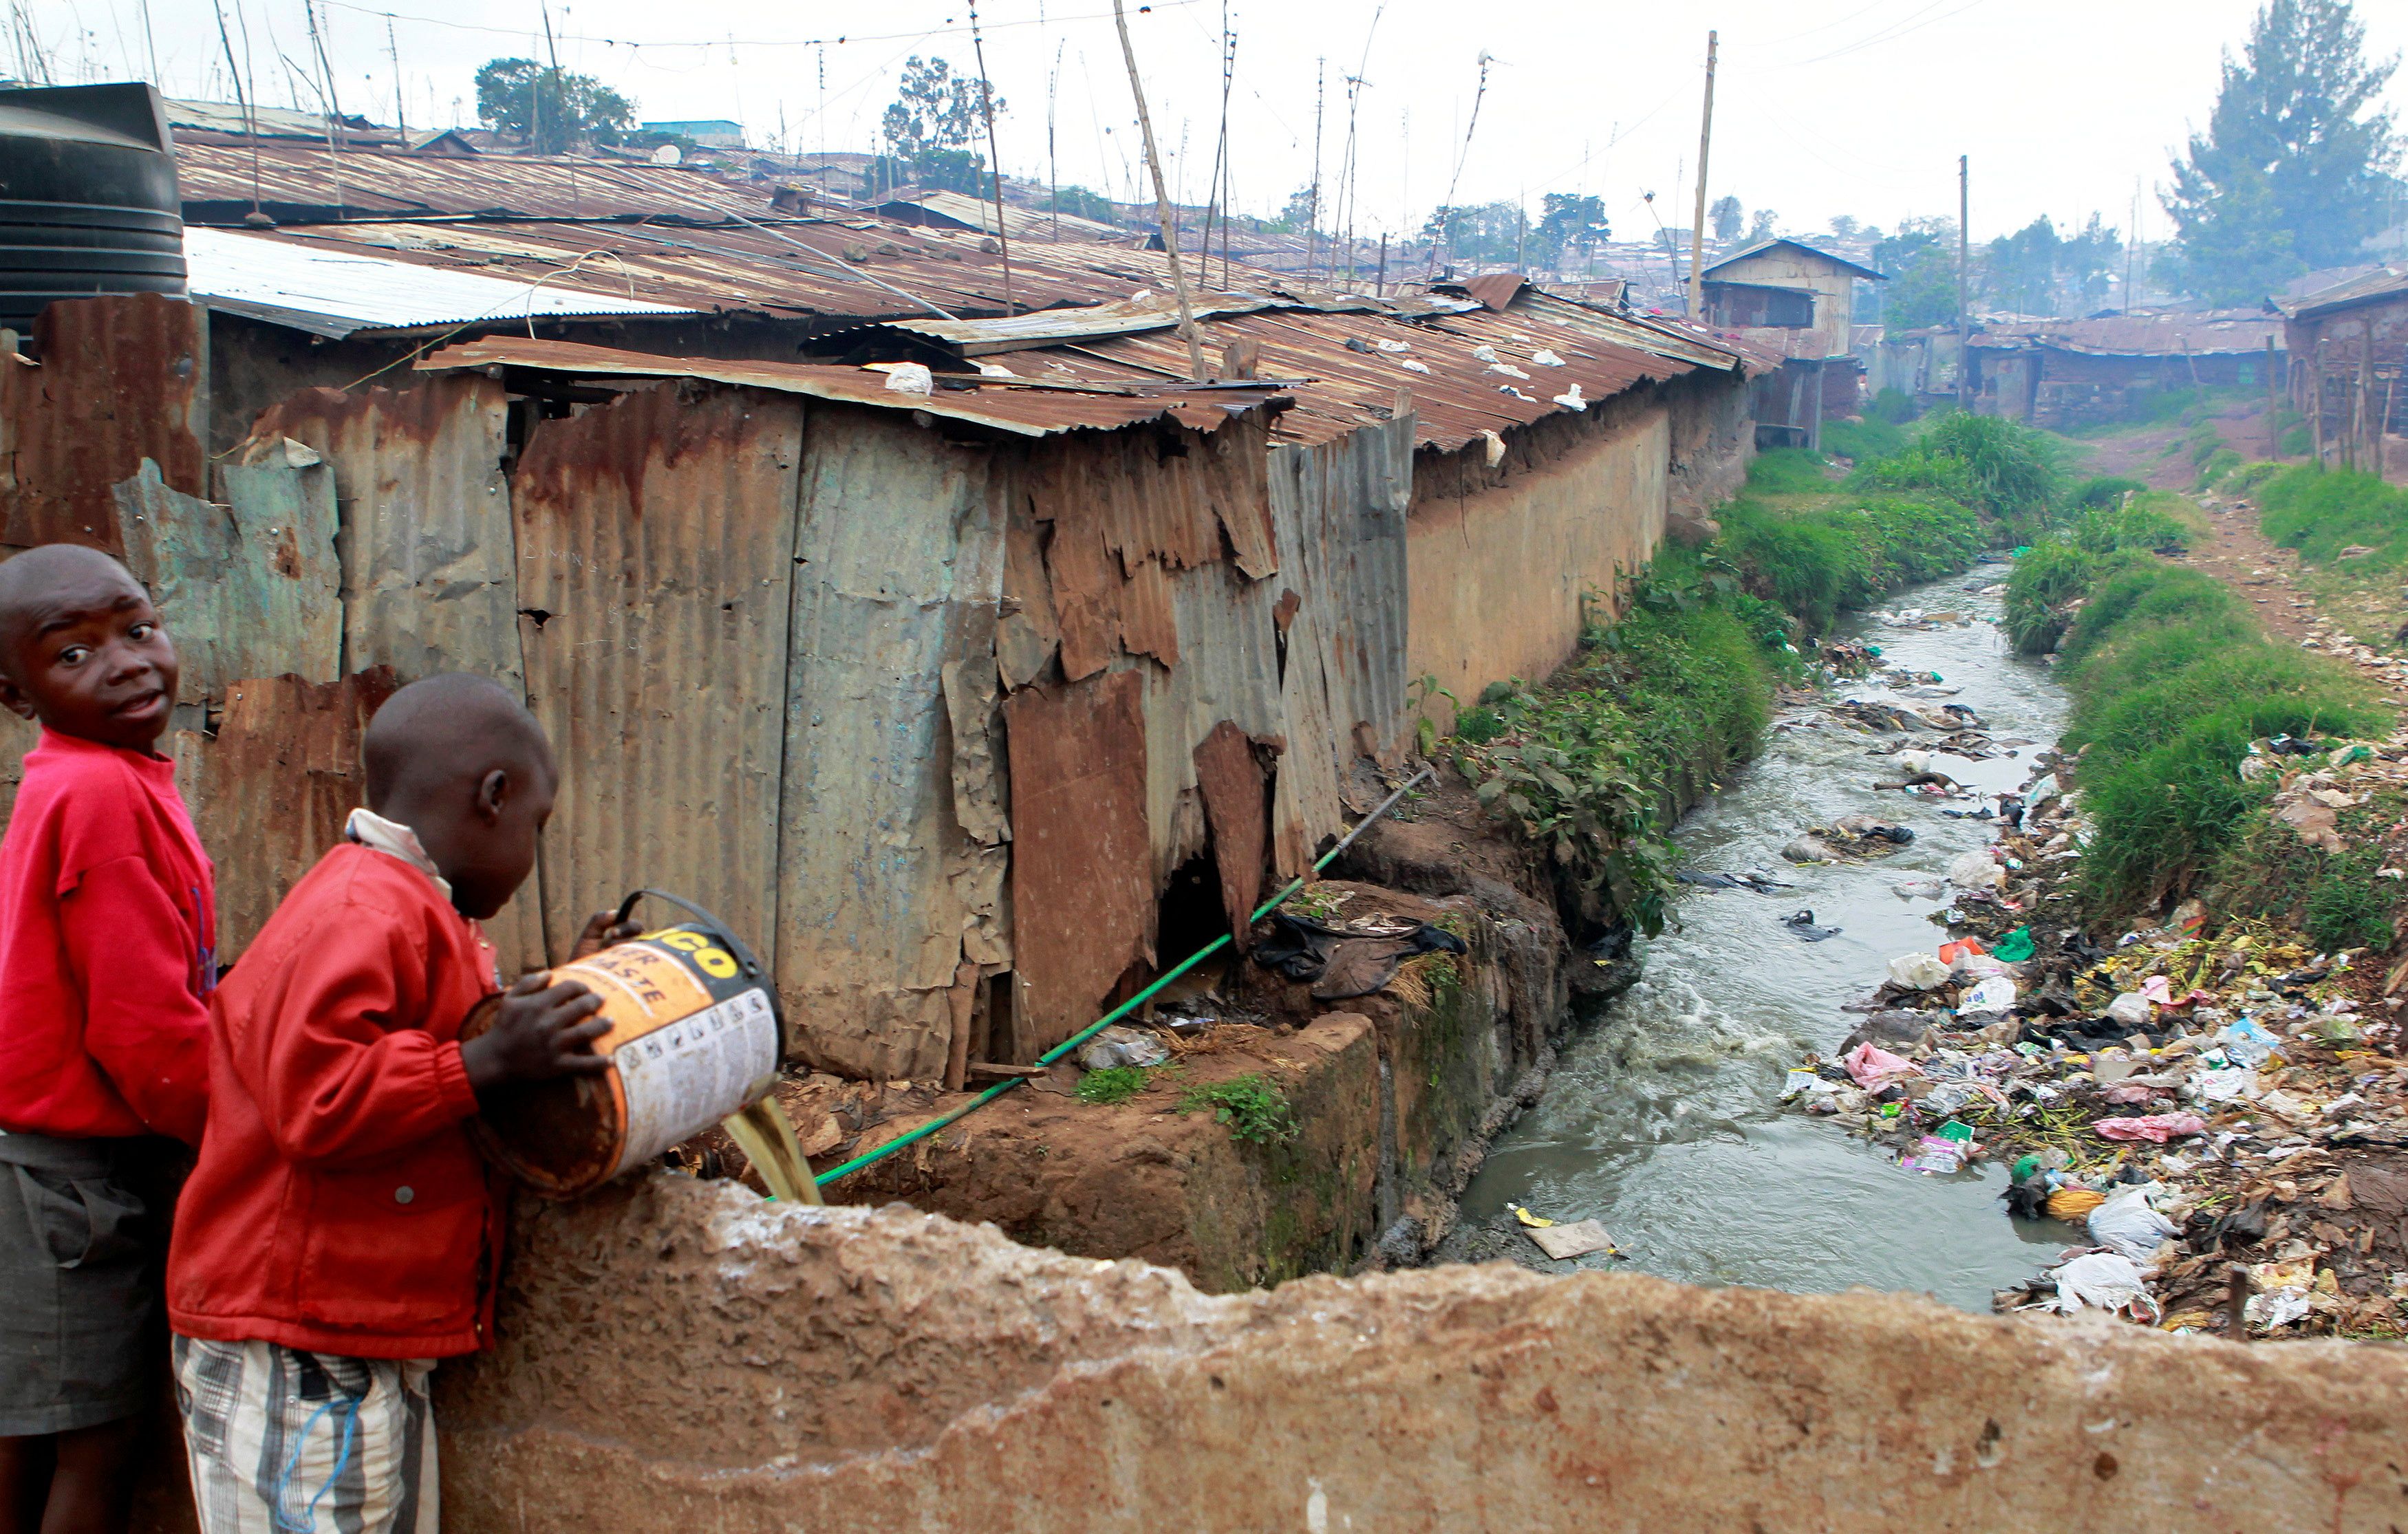 A boy disposes of raw sewage into a stream in the sprawling Kibera slum in Kenya's capital Nairobi